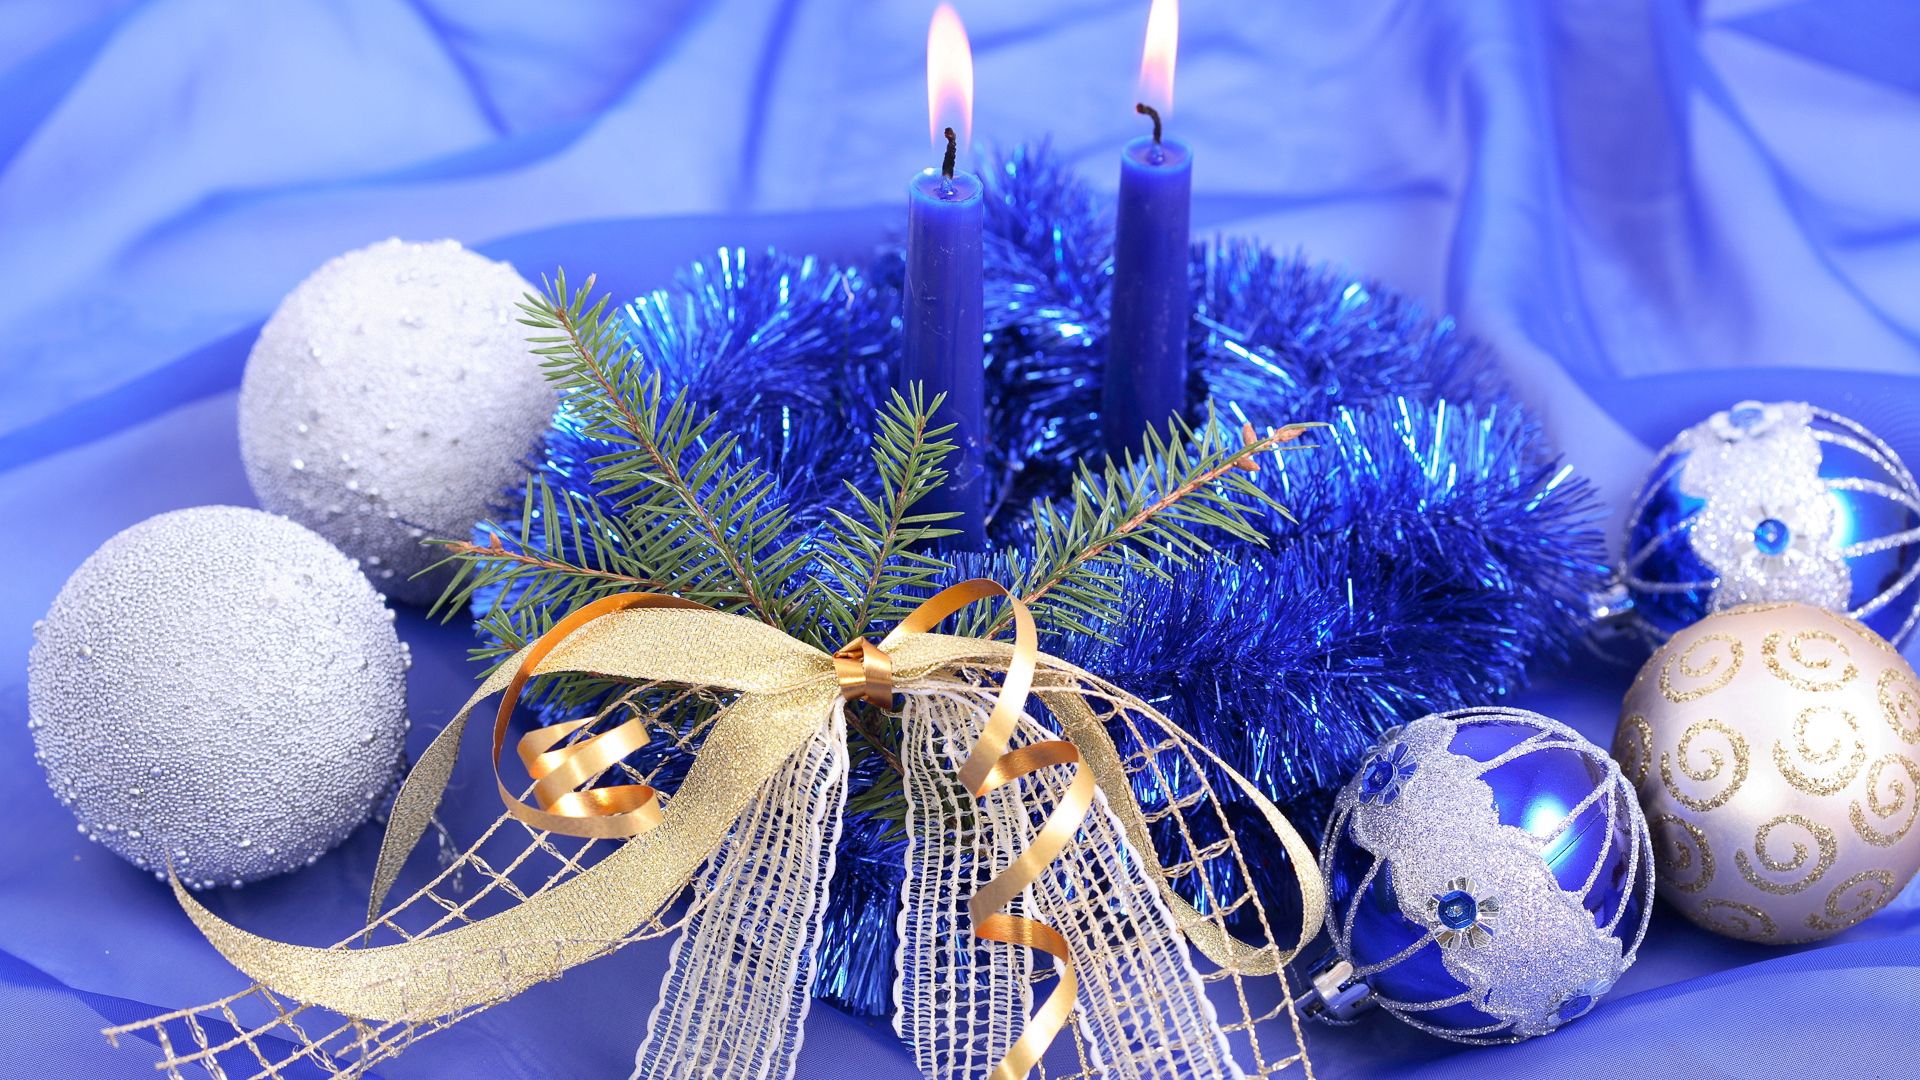 holidays, candles, tape, balls, bows